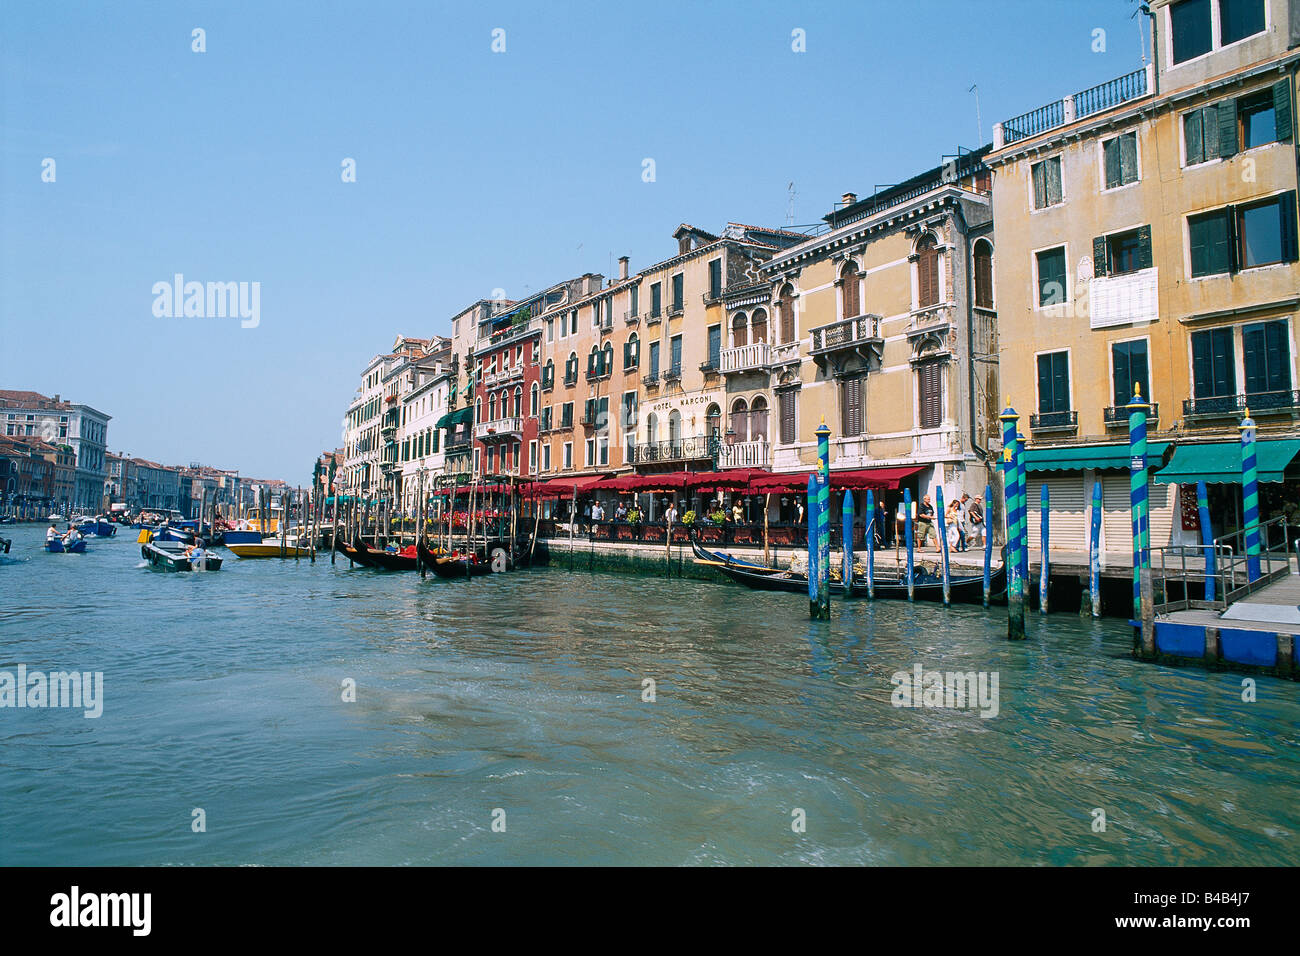 Italy Venice The Grand Canal way of life Stock Photo